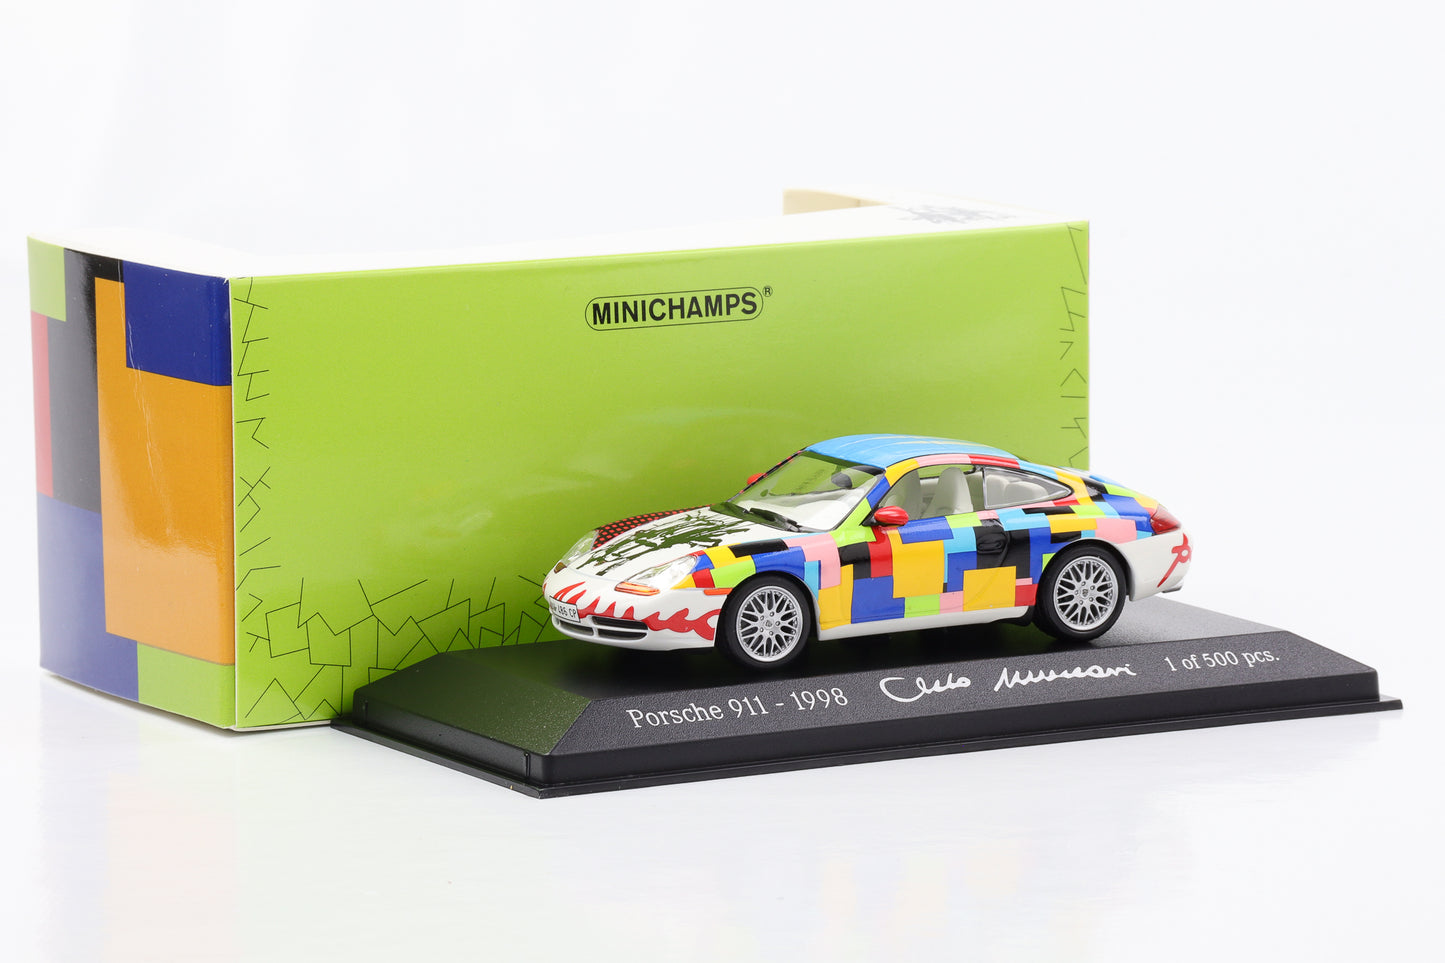 1:43 Porsche 911 996 1998 Cleto Munari Designer Minichamps limited